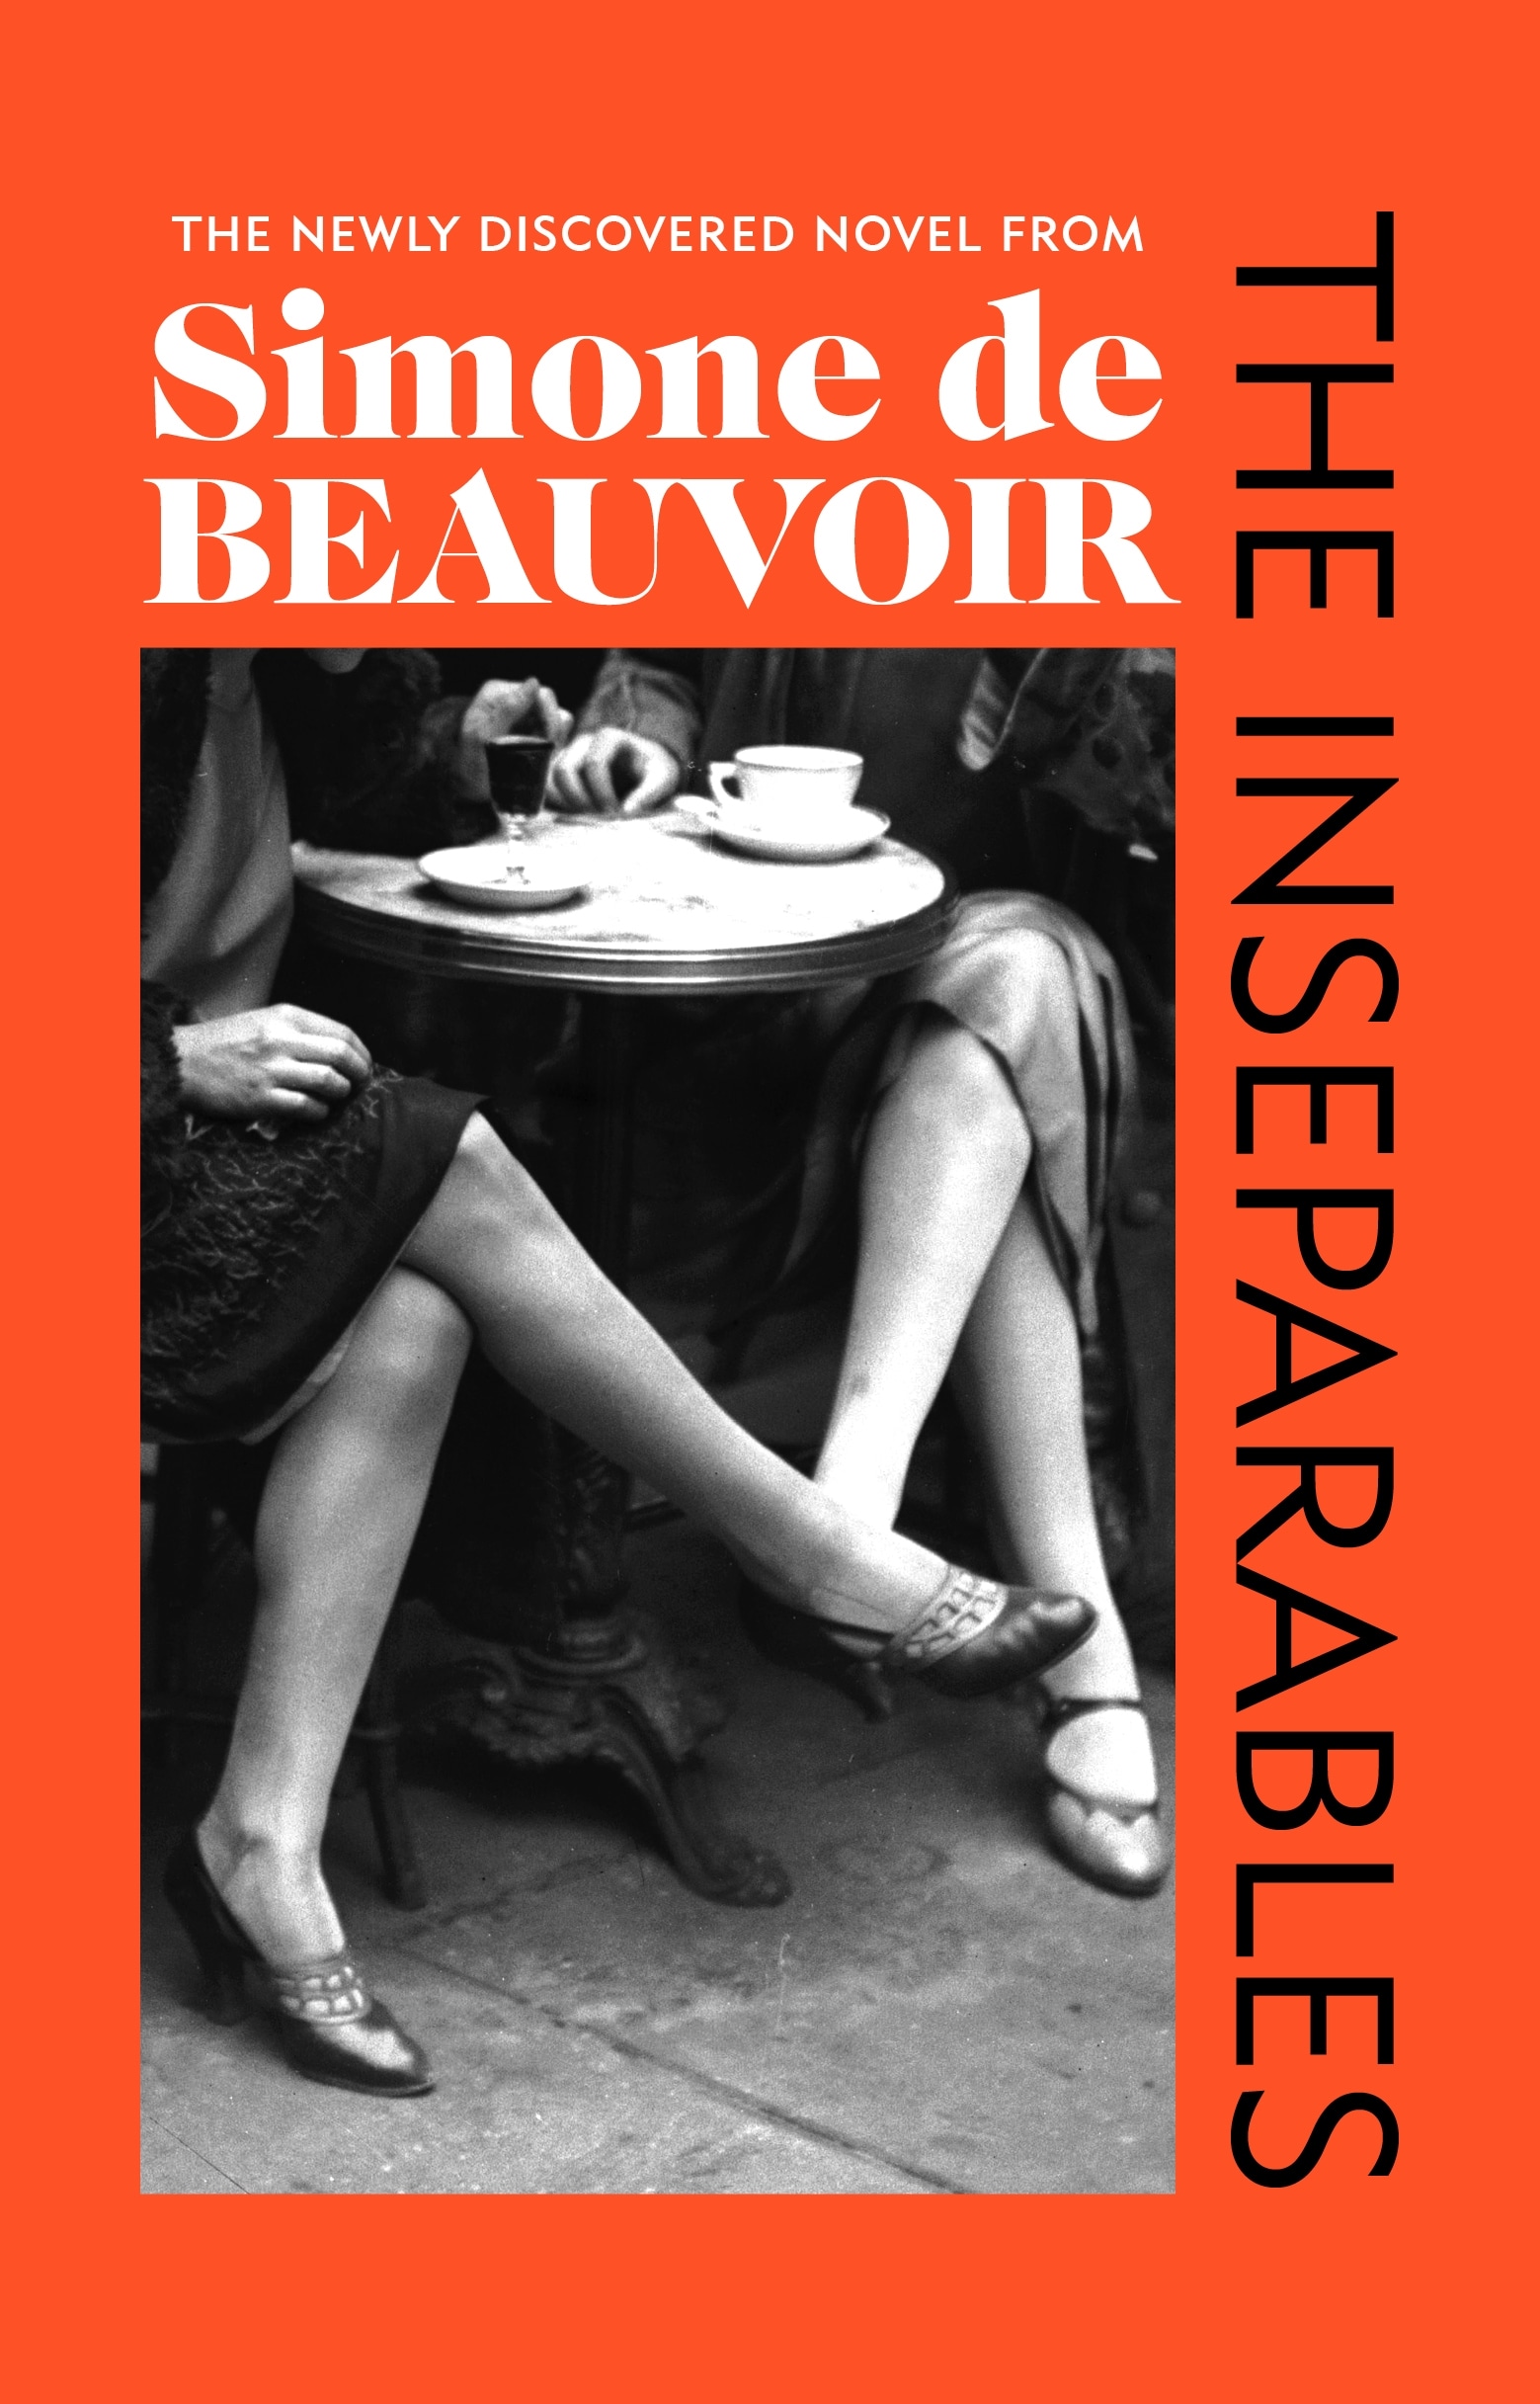 Book “The Inseparables” by Simone de Beauvoir — September 2, 2021